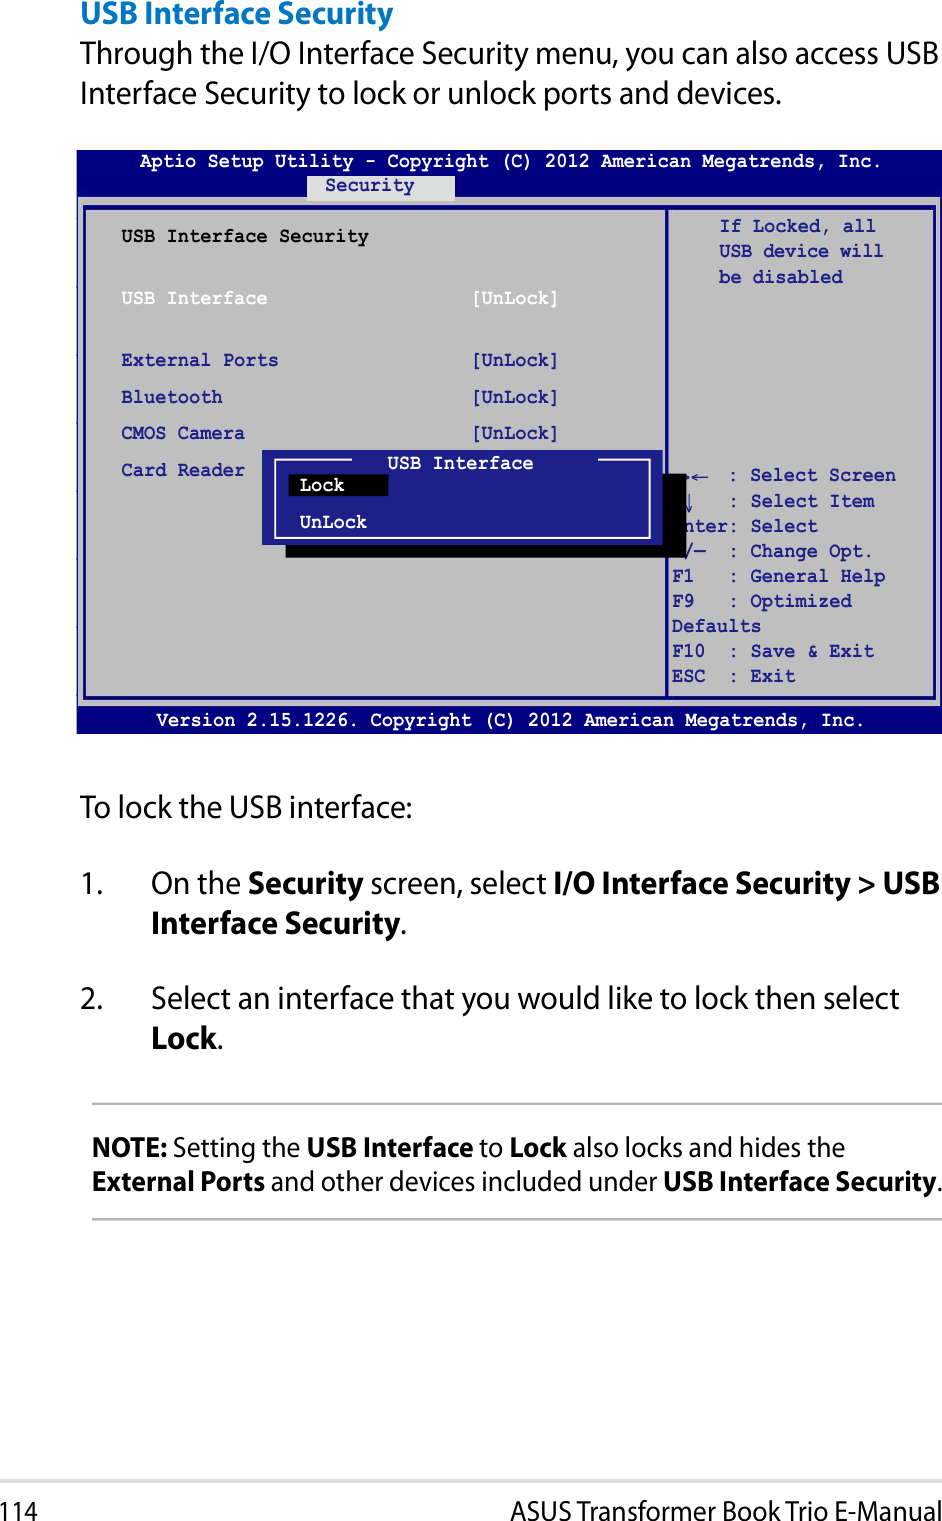                                      Version 2.15.1226. Copyright (C) 2012 American Megatrends, Inc.USB Interface SecurityUSB Interface                  [UnLock]External Ports                 [UnLock]Bluetooth                      [UnLock]CMOS Camera                    [UnLock]Card Reader                    [UnLock] If Locked, all U S B   d e v i c e   w i l l  be disabledAptio Setup Utility - Copyright (C) 2012 American Megatrends, Inc.Security: Select Screen    : Select Item Enter: Select +/—  : Change Opt. F1   : General Help F9   : Optimized Defaults F10  : Save &amp; Exit     ESC  : Exit USB InterfaceLockUnLock                                                                            